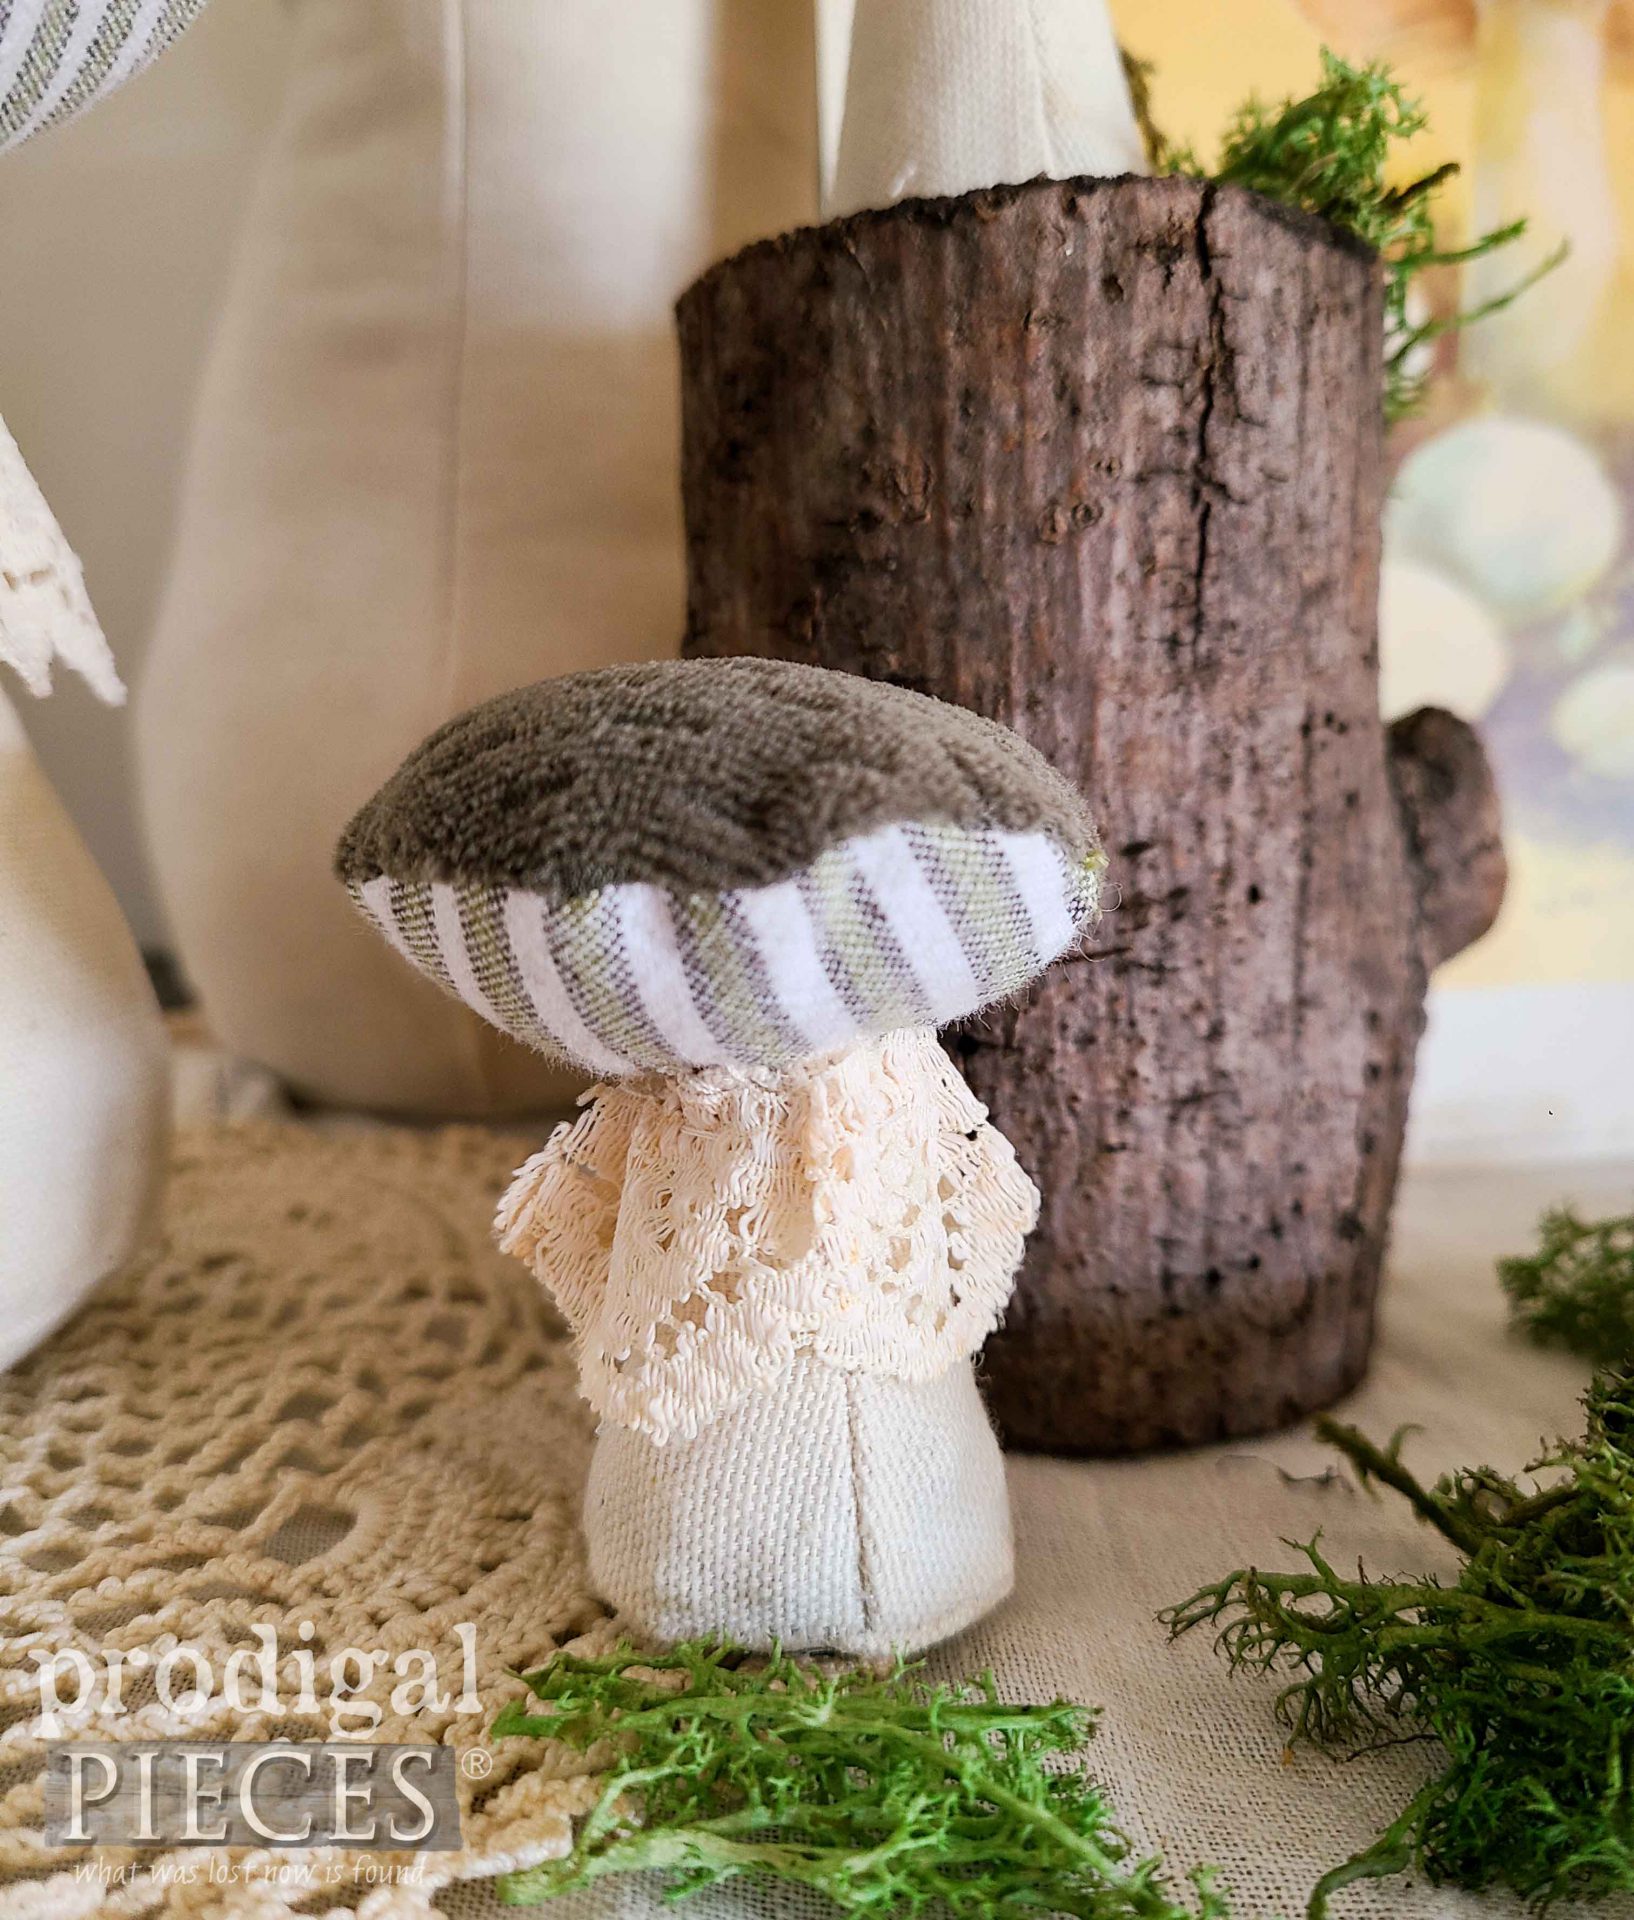 Little Fabric Toadstool Mushroom Created by Larissa of Prodigal Pieces | prodigalpieces.com #prodigalpieces